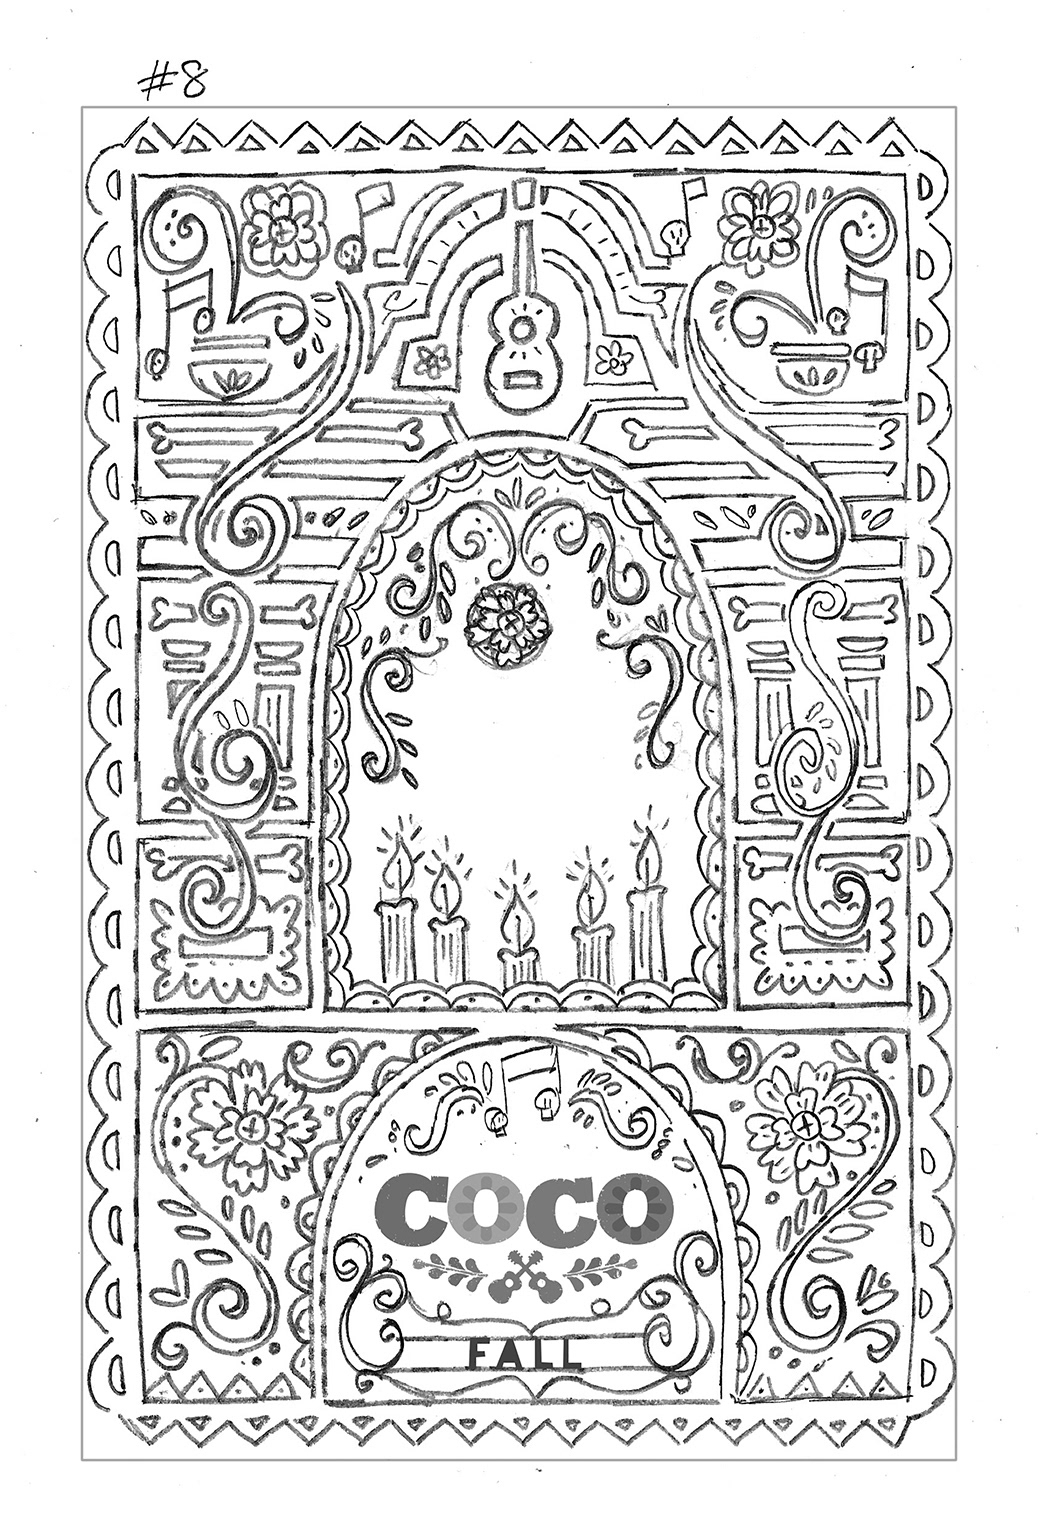 Coco papel picado illustrated Silhouette graphic folk art Mexican ornate guitar skull